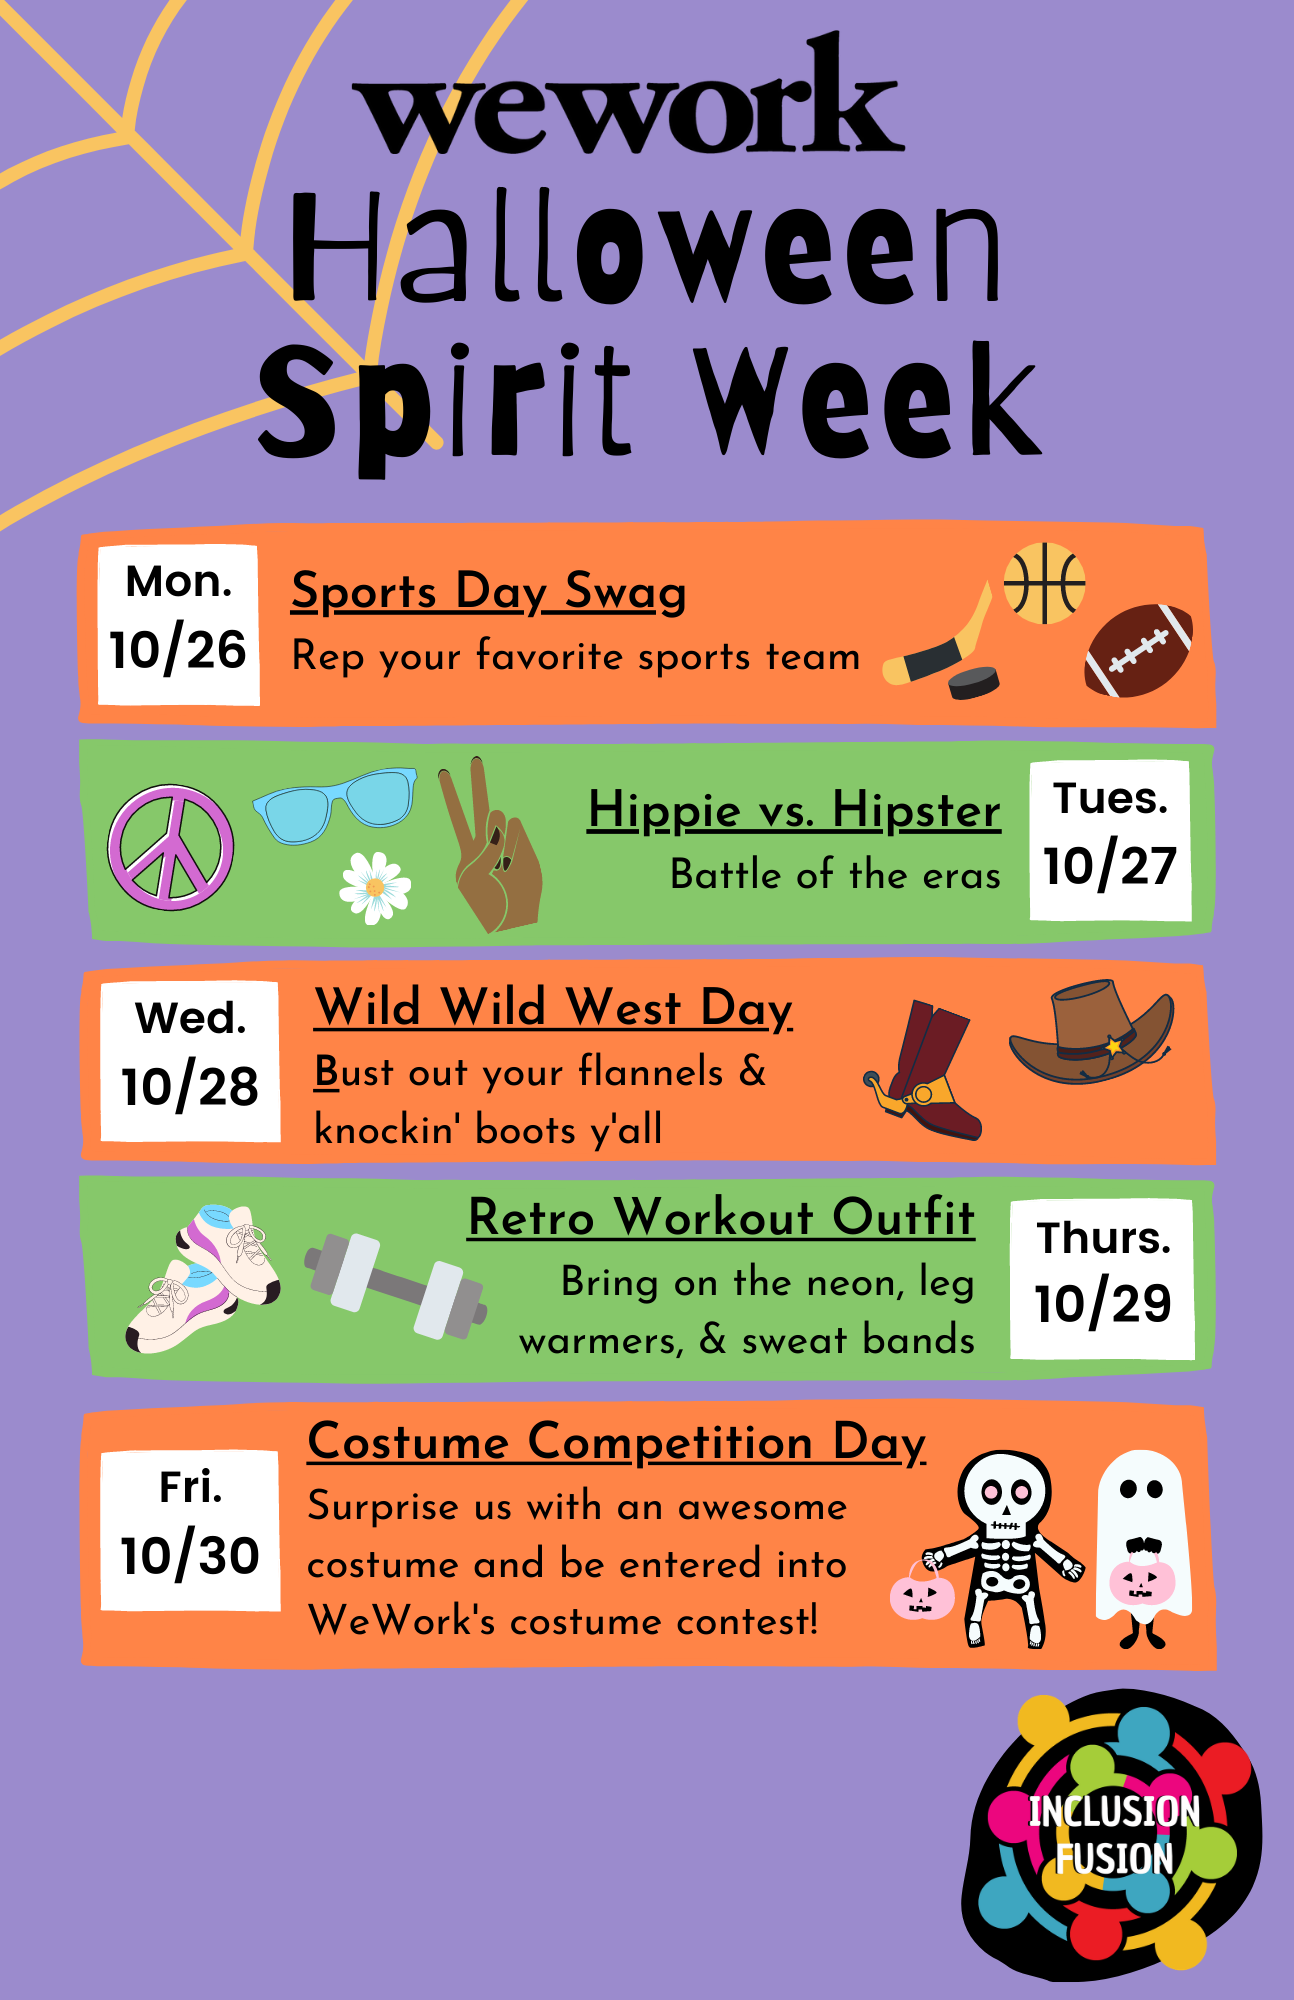 spirit week outfits